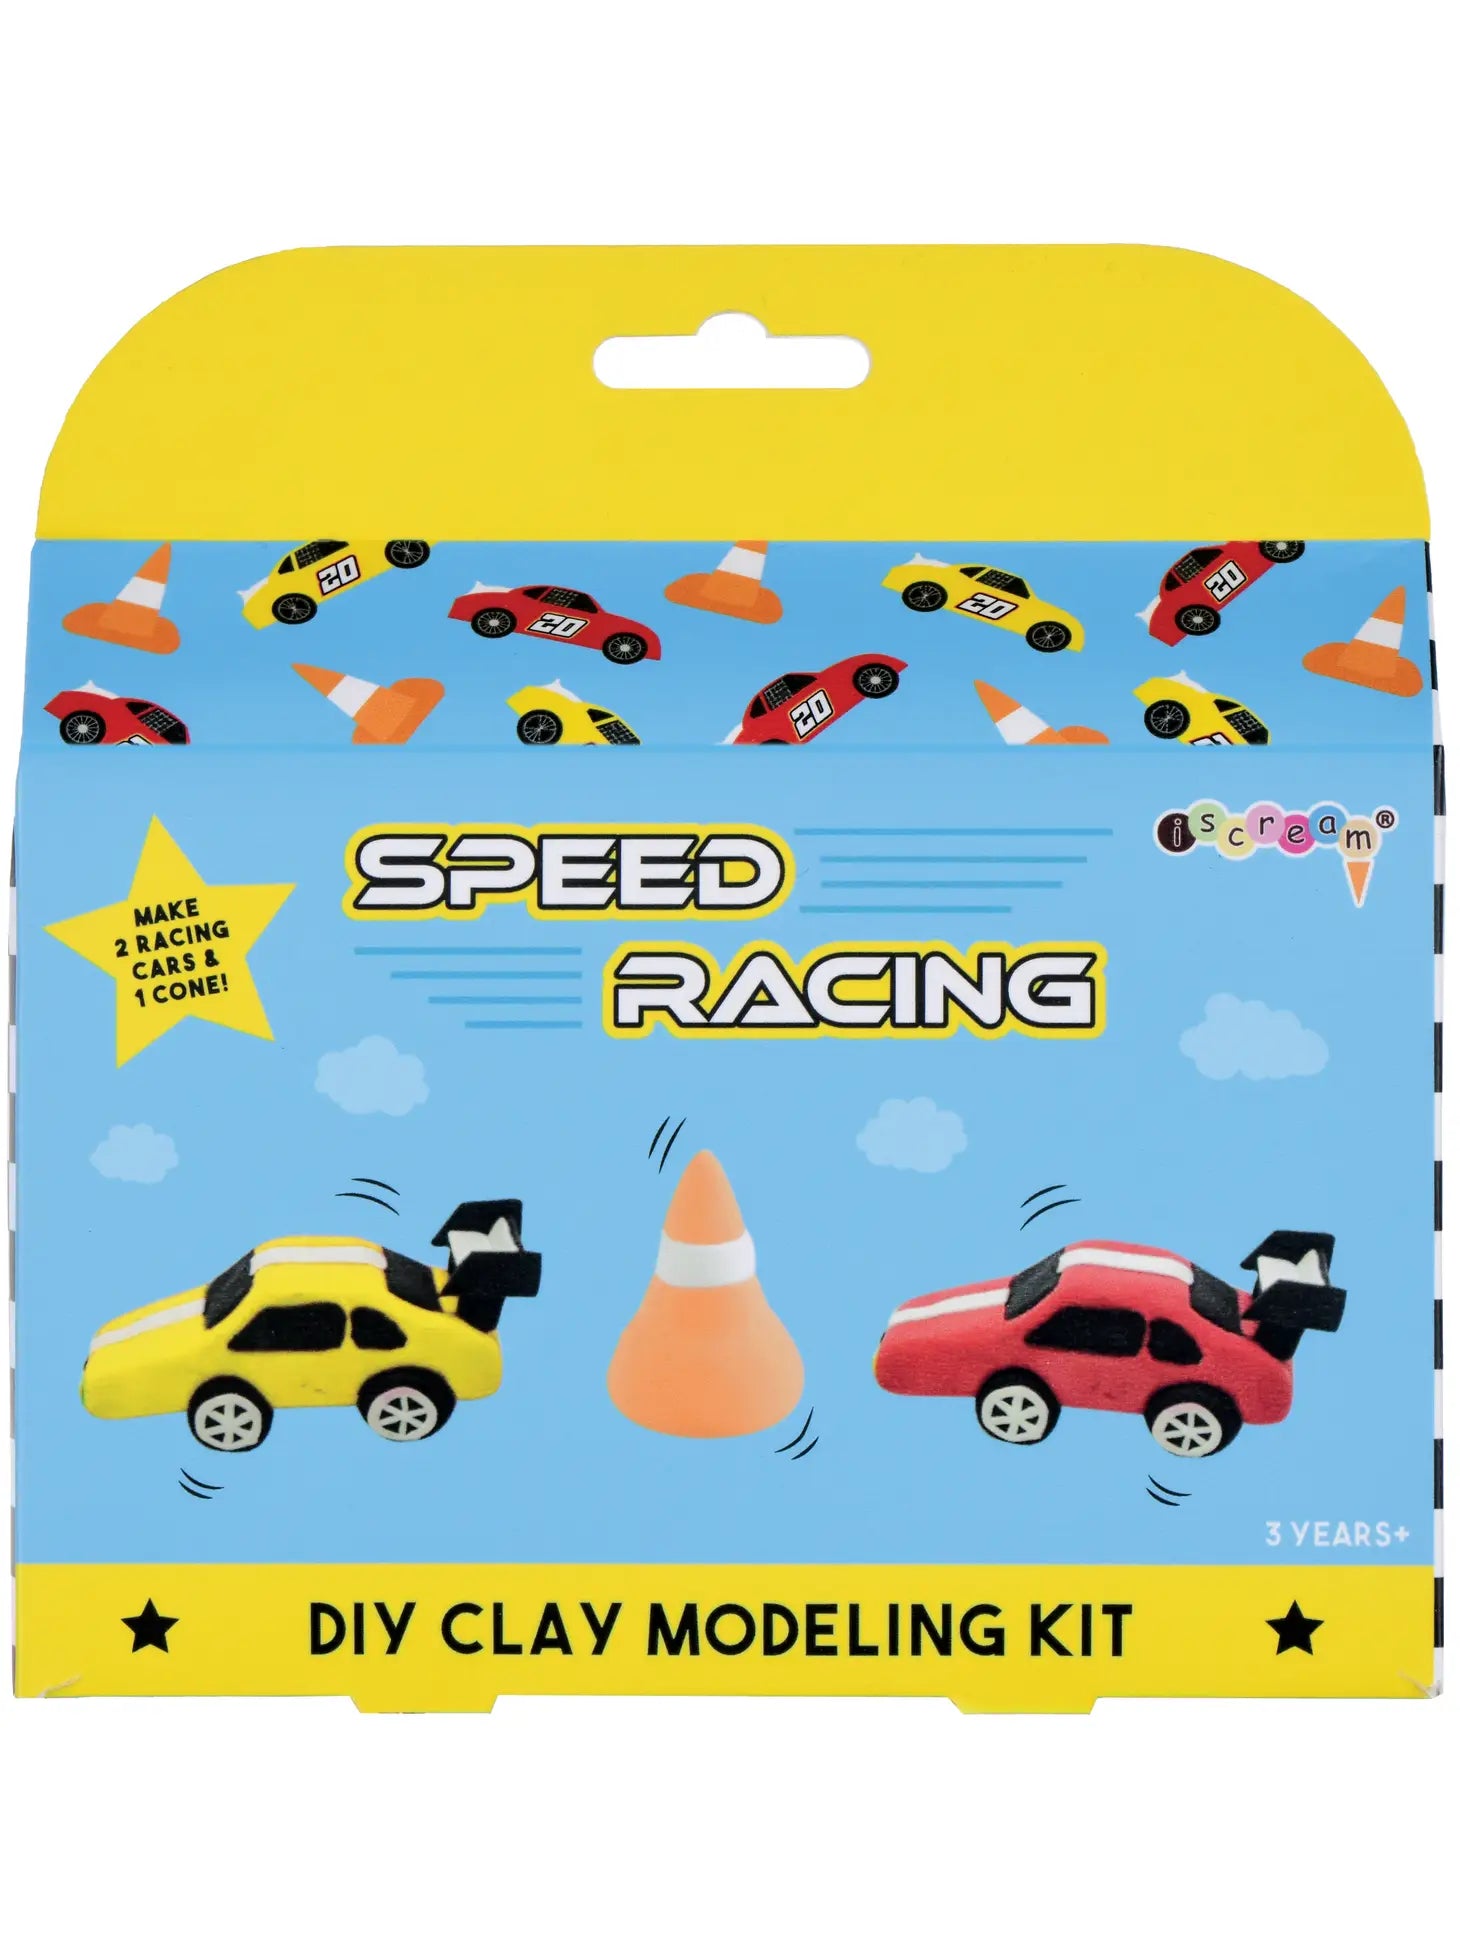 Make Your Own Racecar Kit